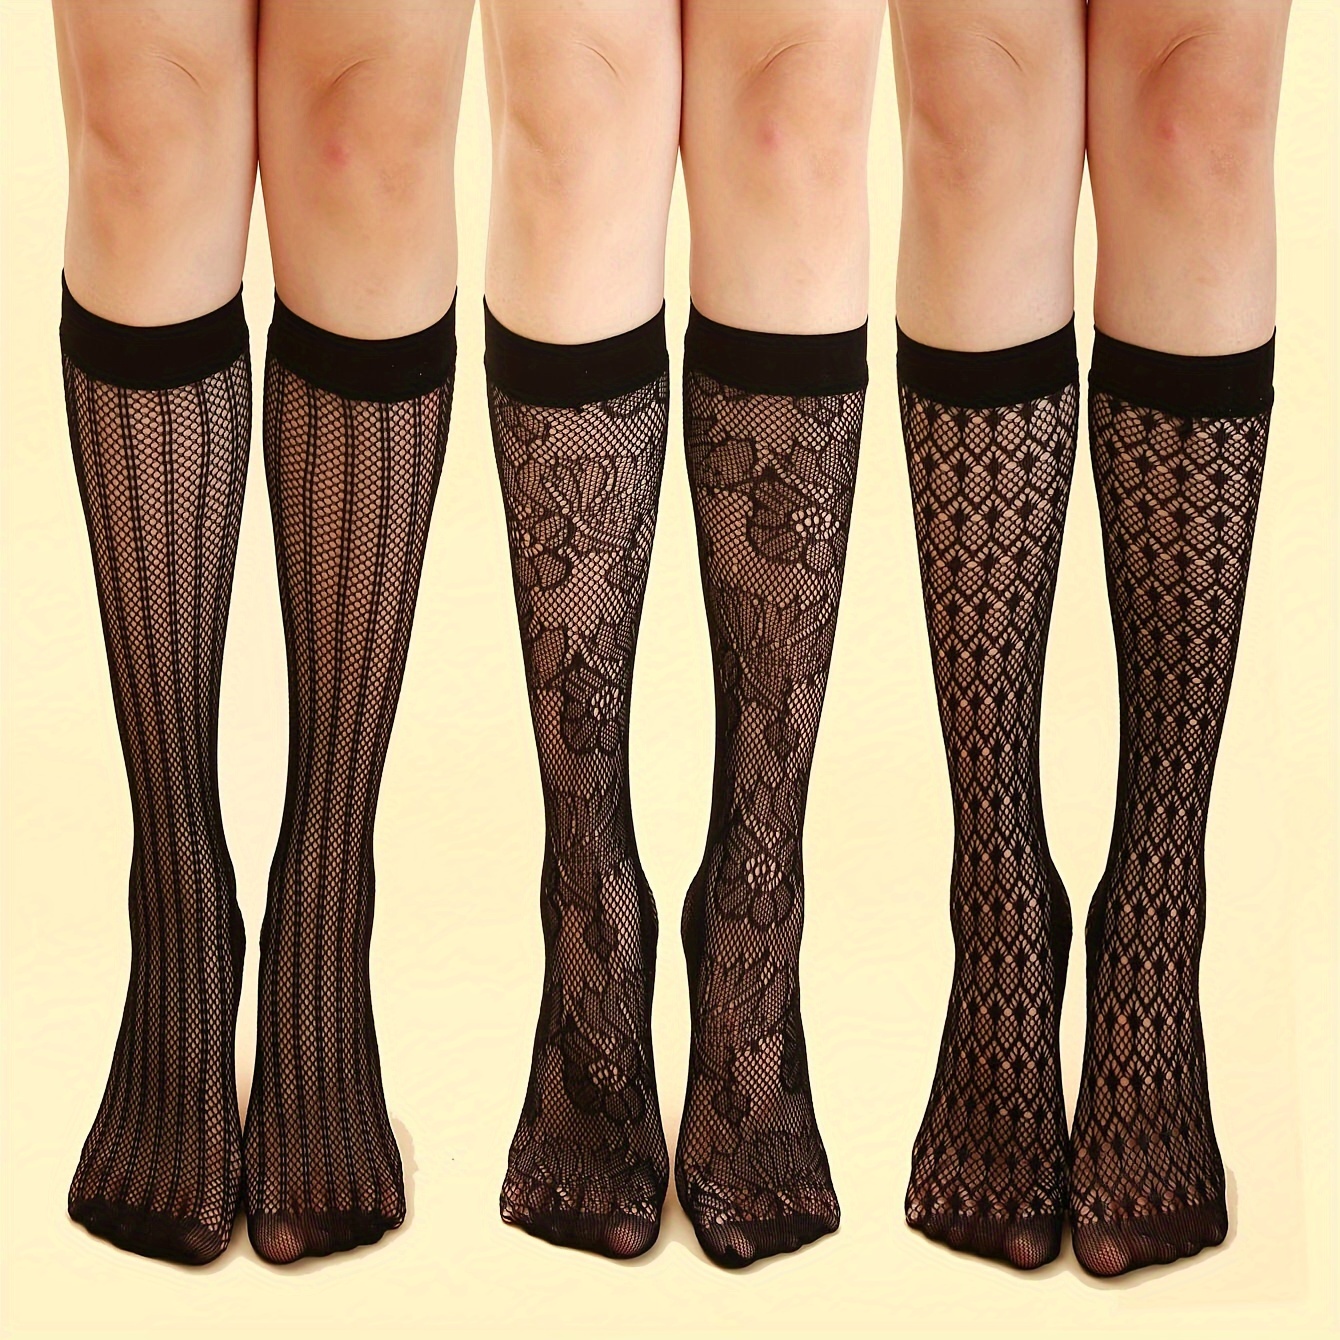 

3 Pairs Floral Lace Knee High Socks, Ultra-thin Sheer Calf Socks, Women's Stockings & Hosiery